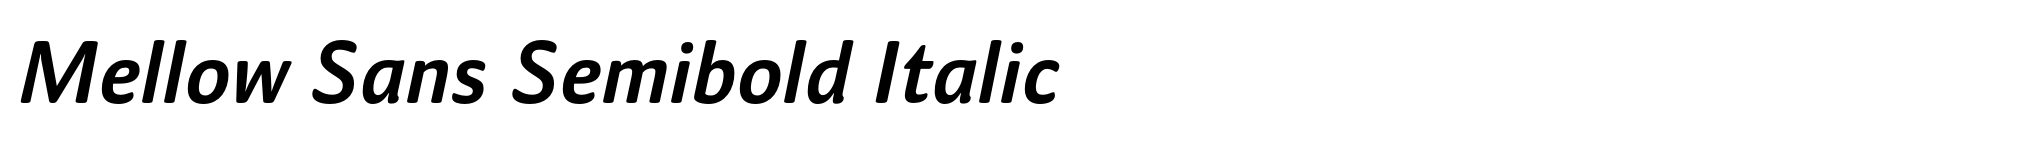 Mellow Sans Semibold Italic image